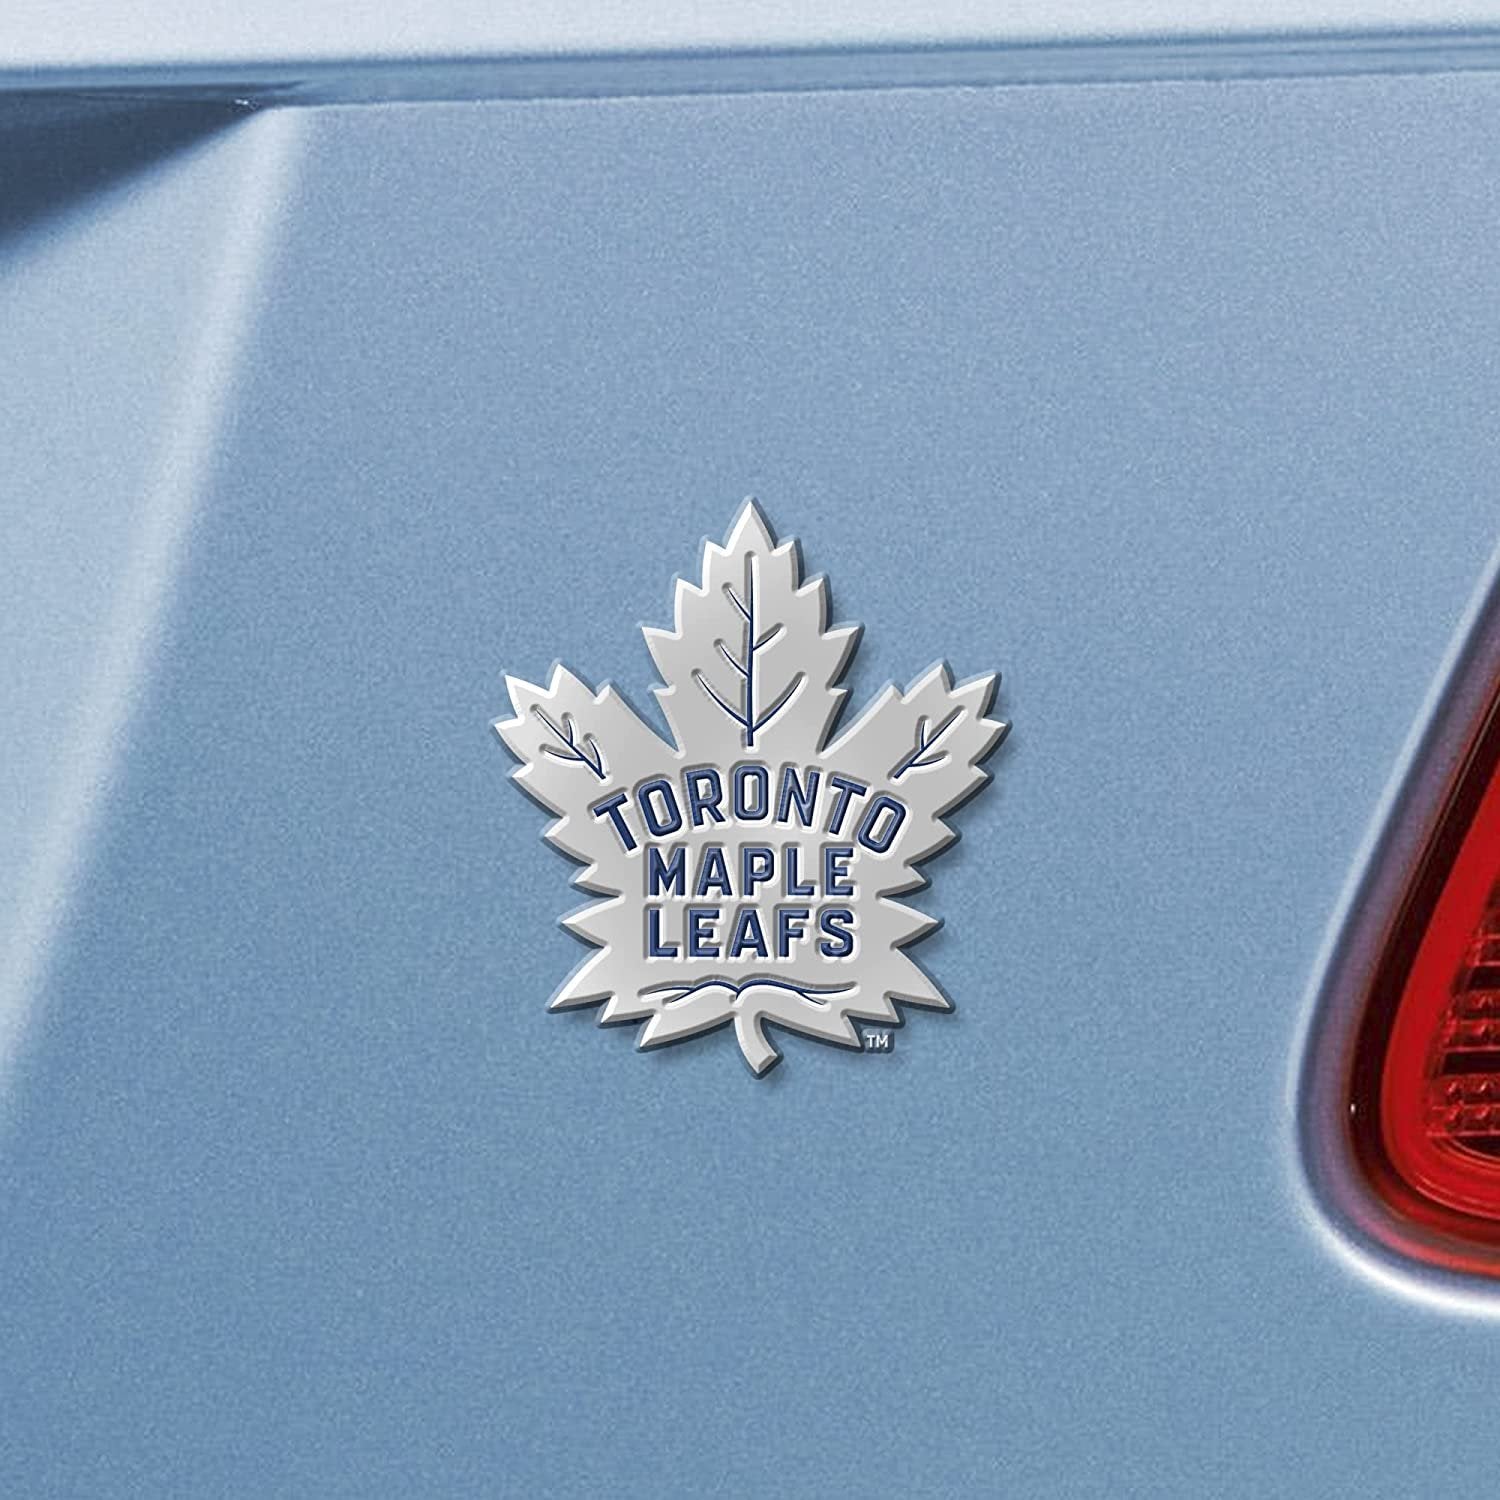 Toronto Maple Leafs Premium Solid Metal Raised Auto Emblem, Shape Cut, Adhesive Backing